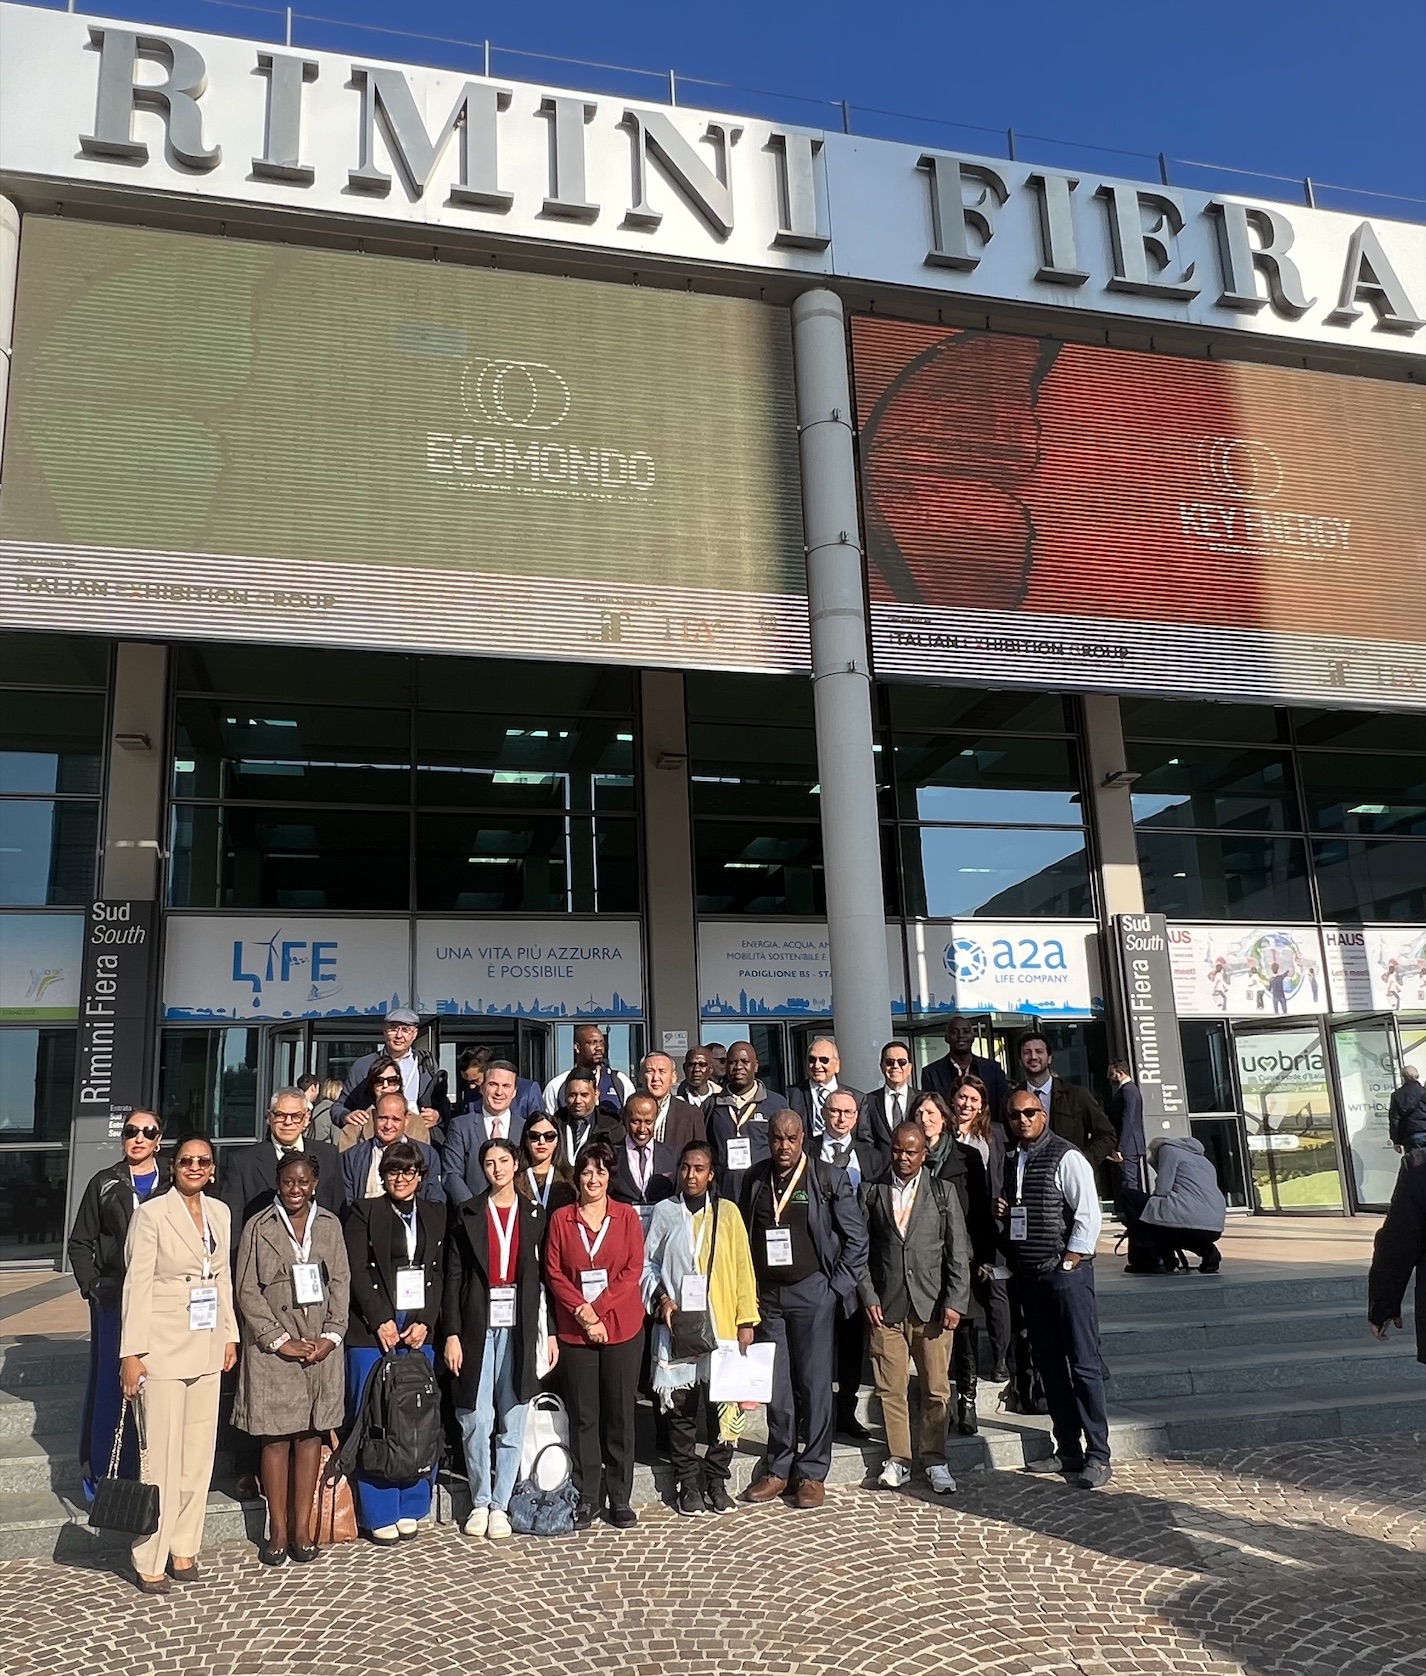 UNIDO ITPO Italy organized delegation in energy and environment at Ecomondo & Key Energy 2022